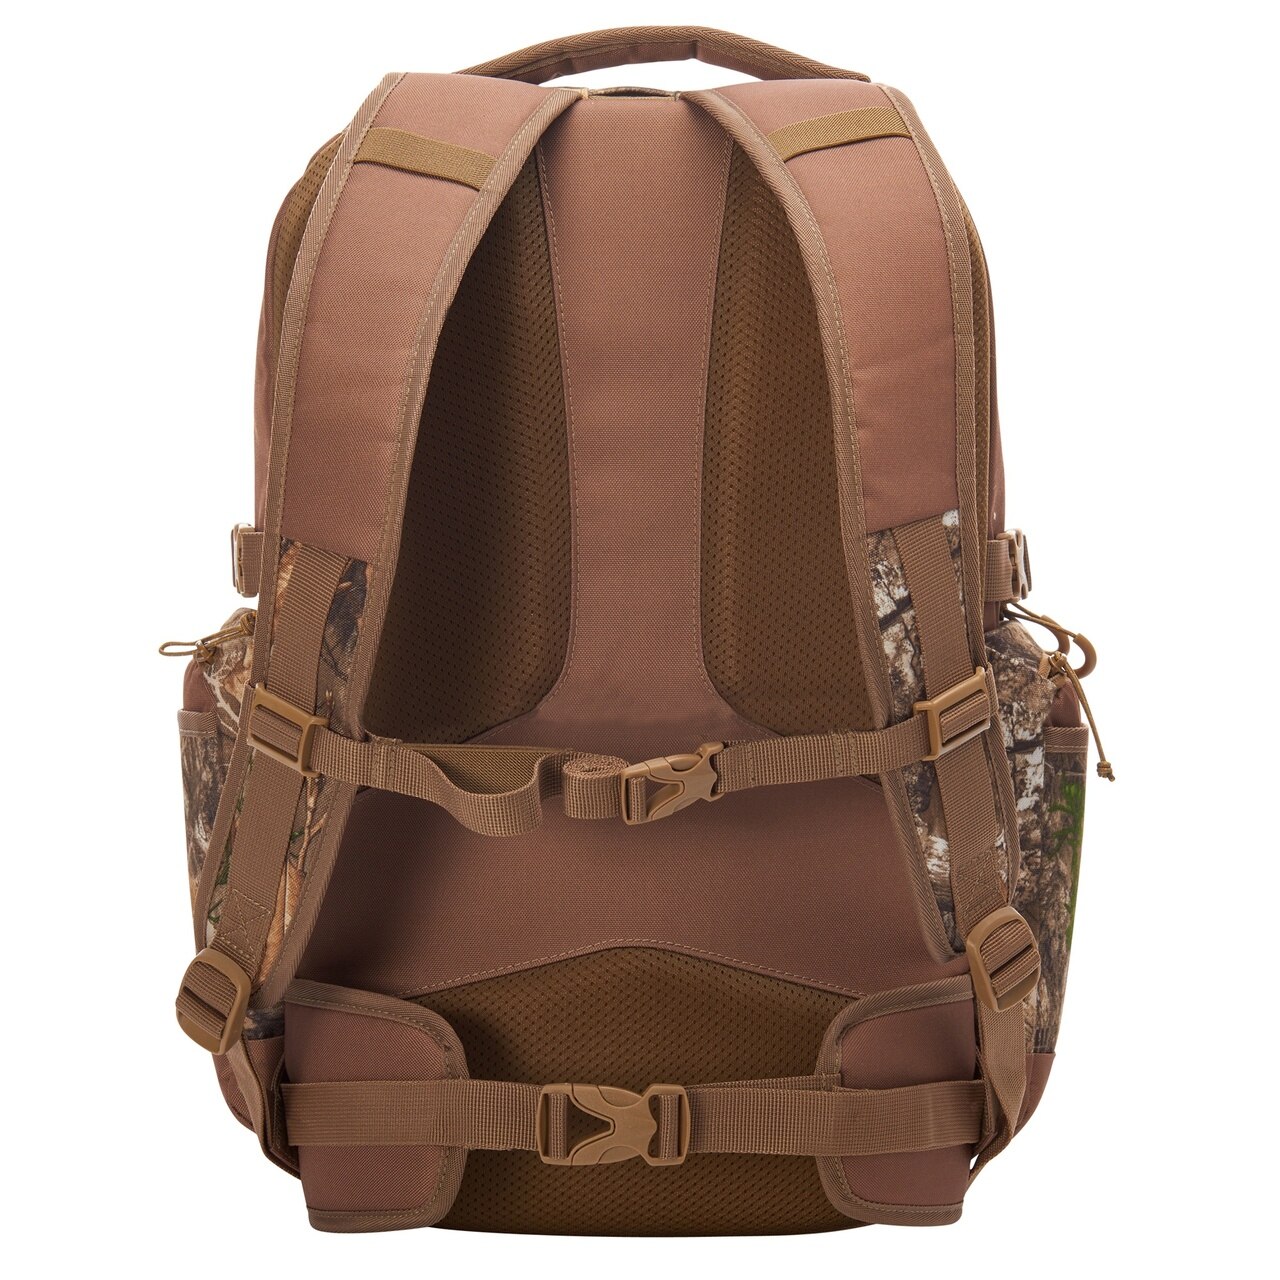 SJK Sage 32 backpack, Realtree Edge print,  rear view